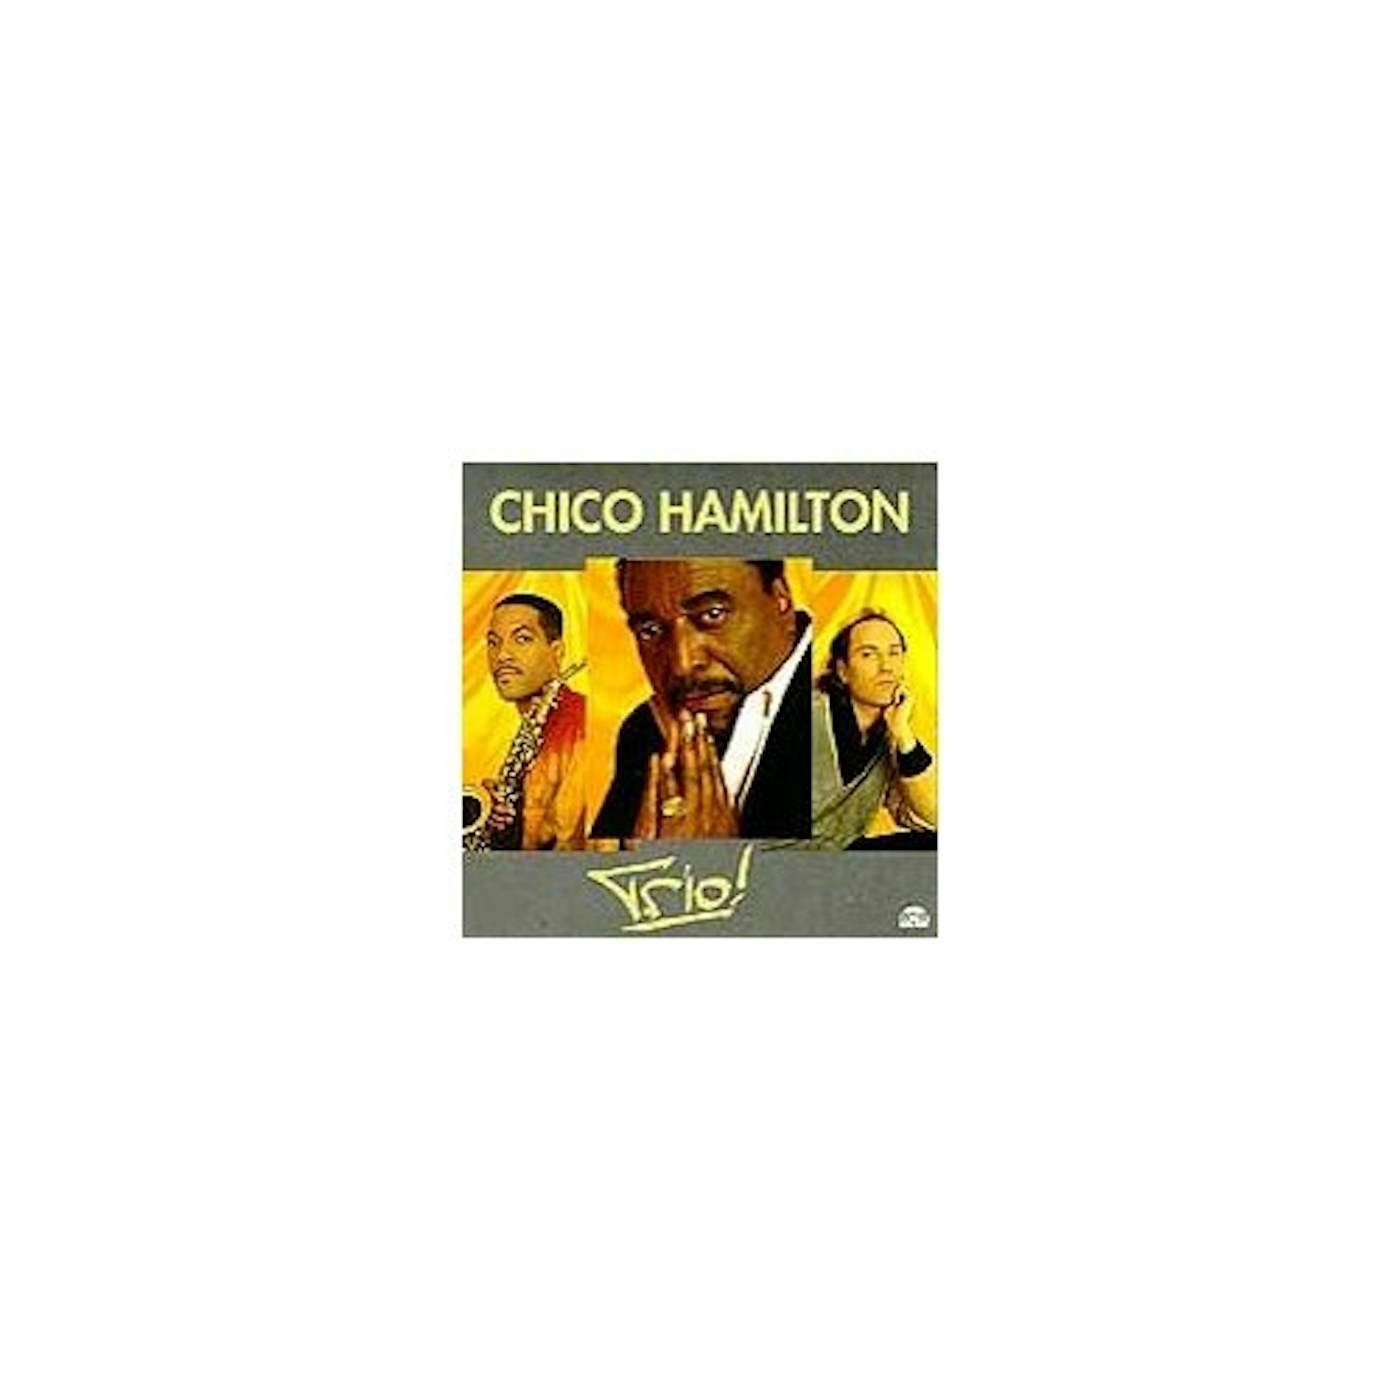 Chico Hamilton TRIO! CD